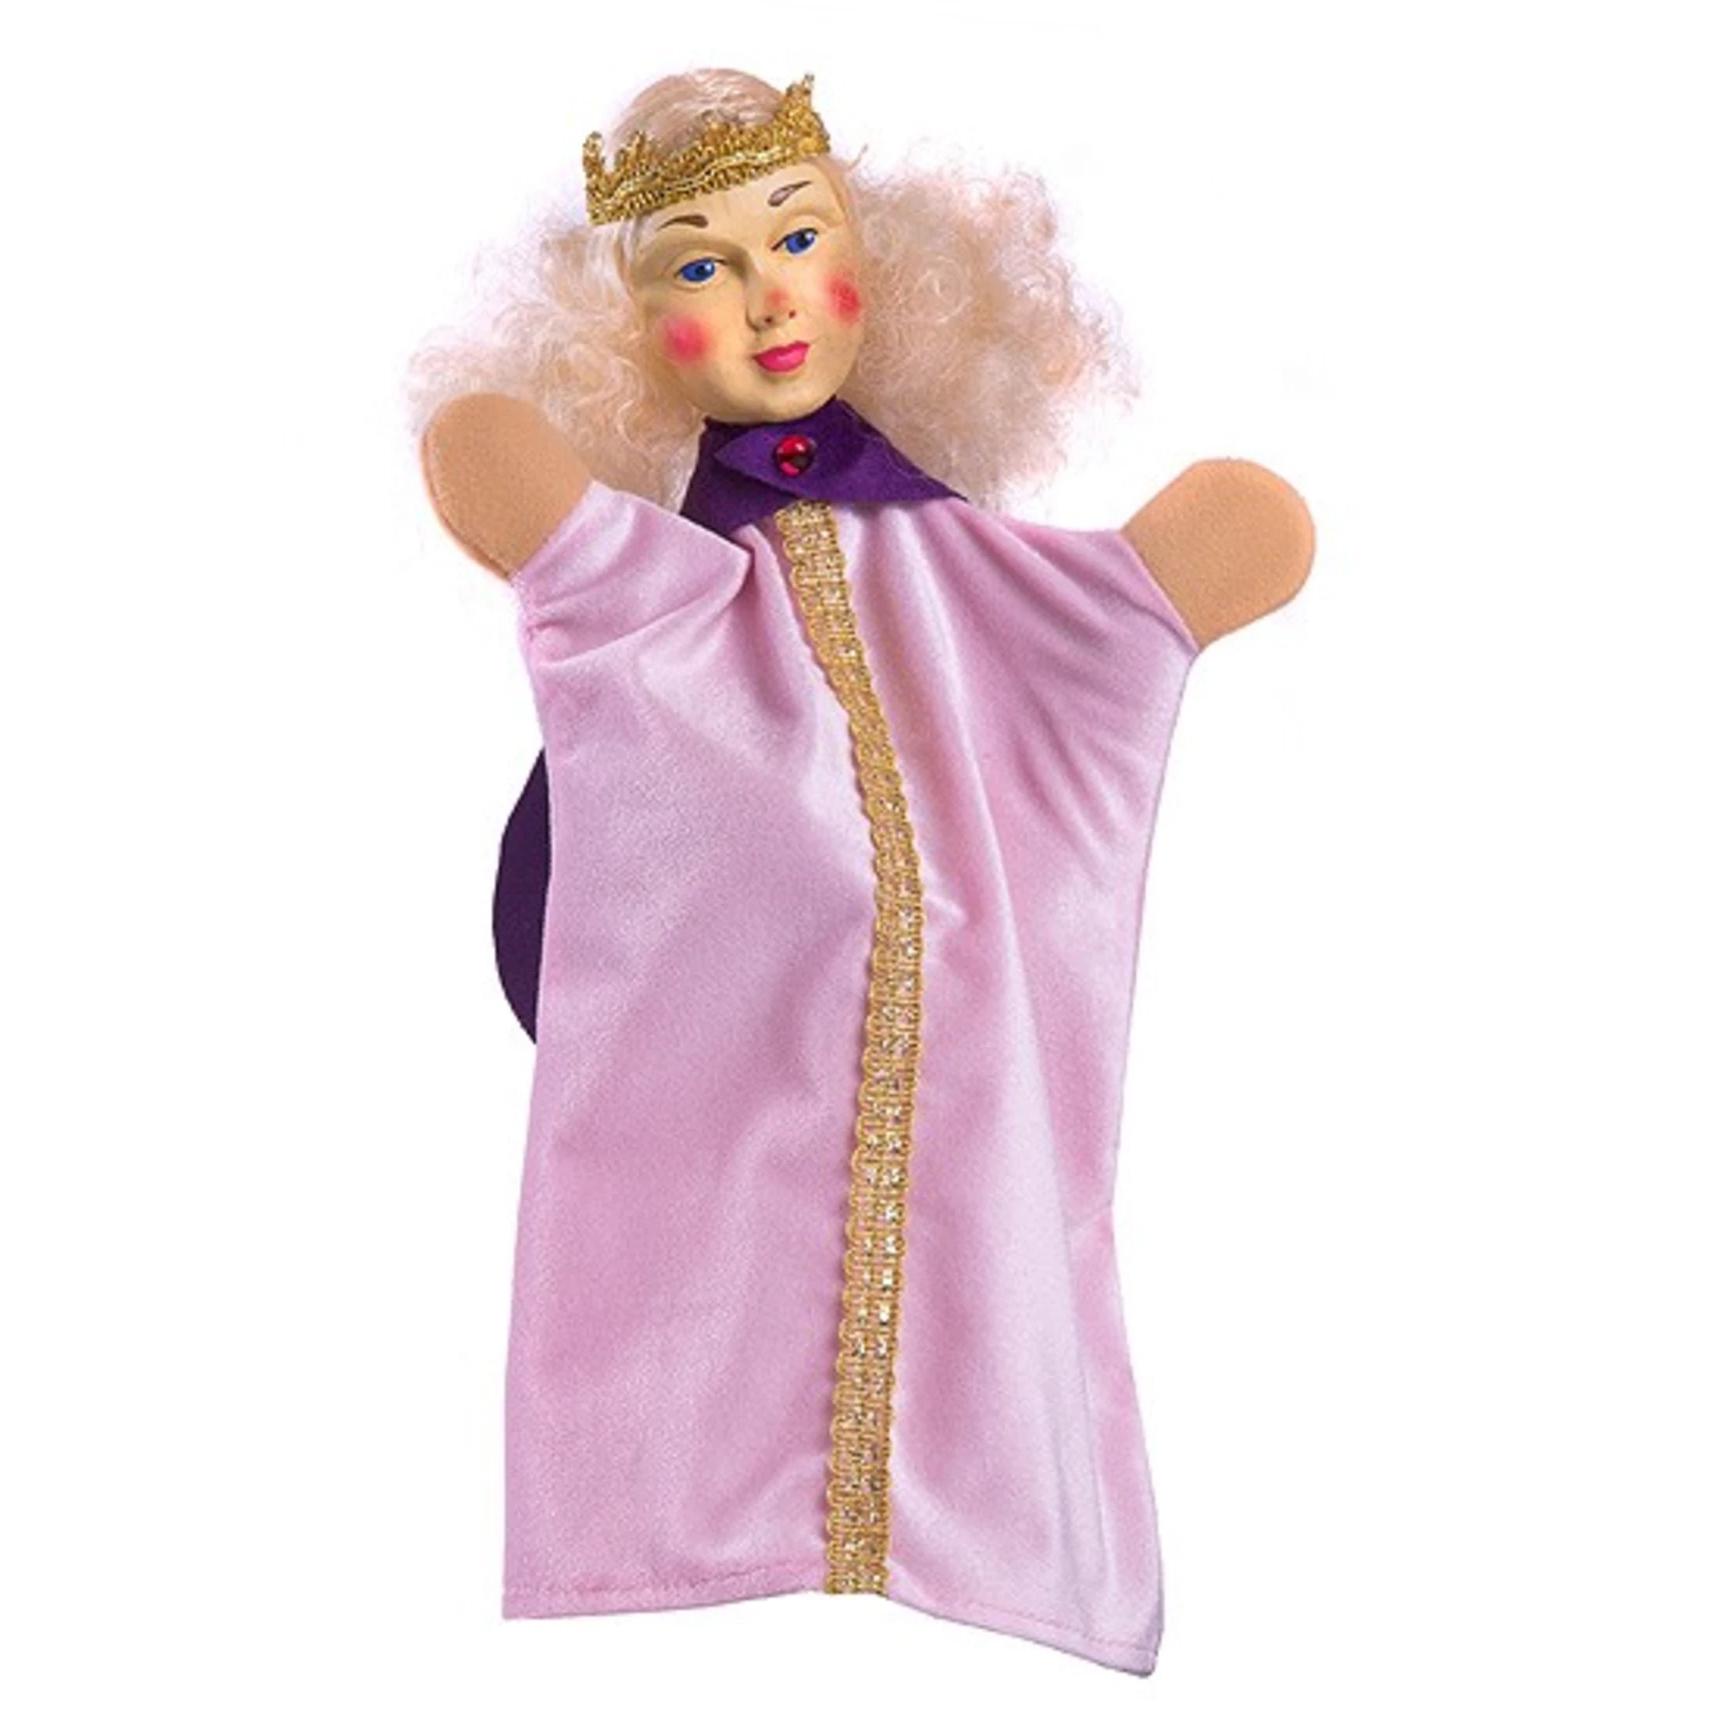 Hand puppet princess - KERSA Micha